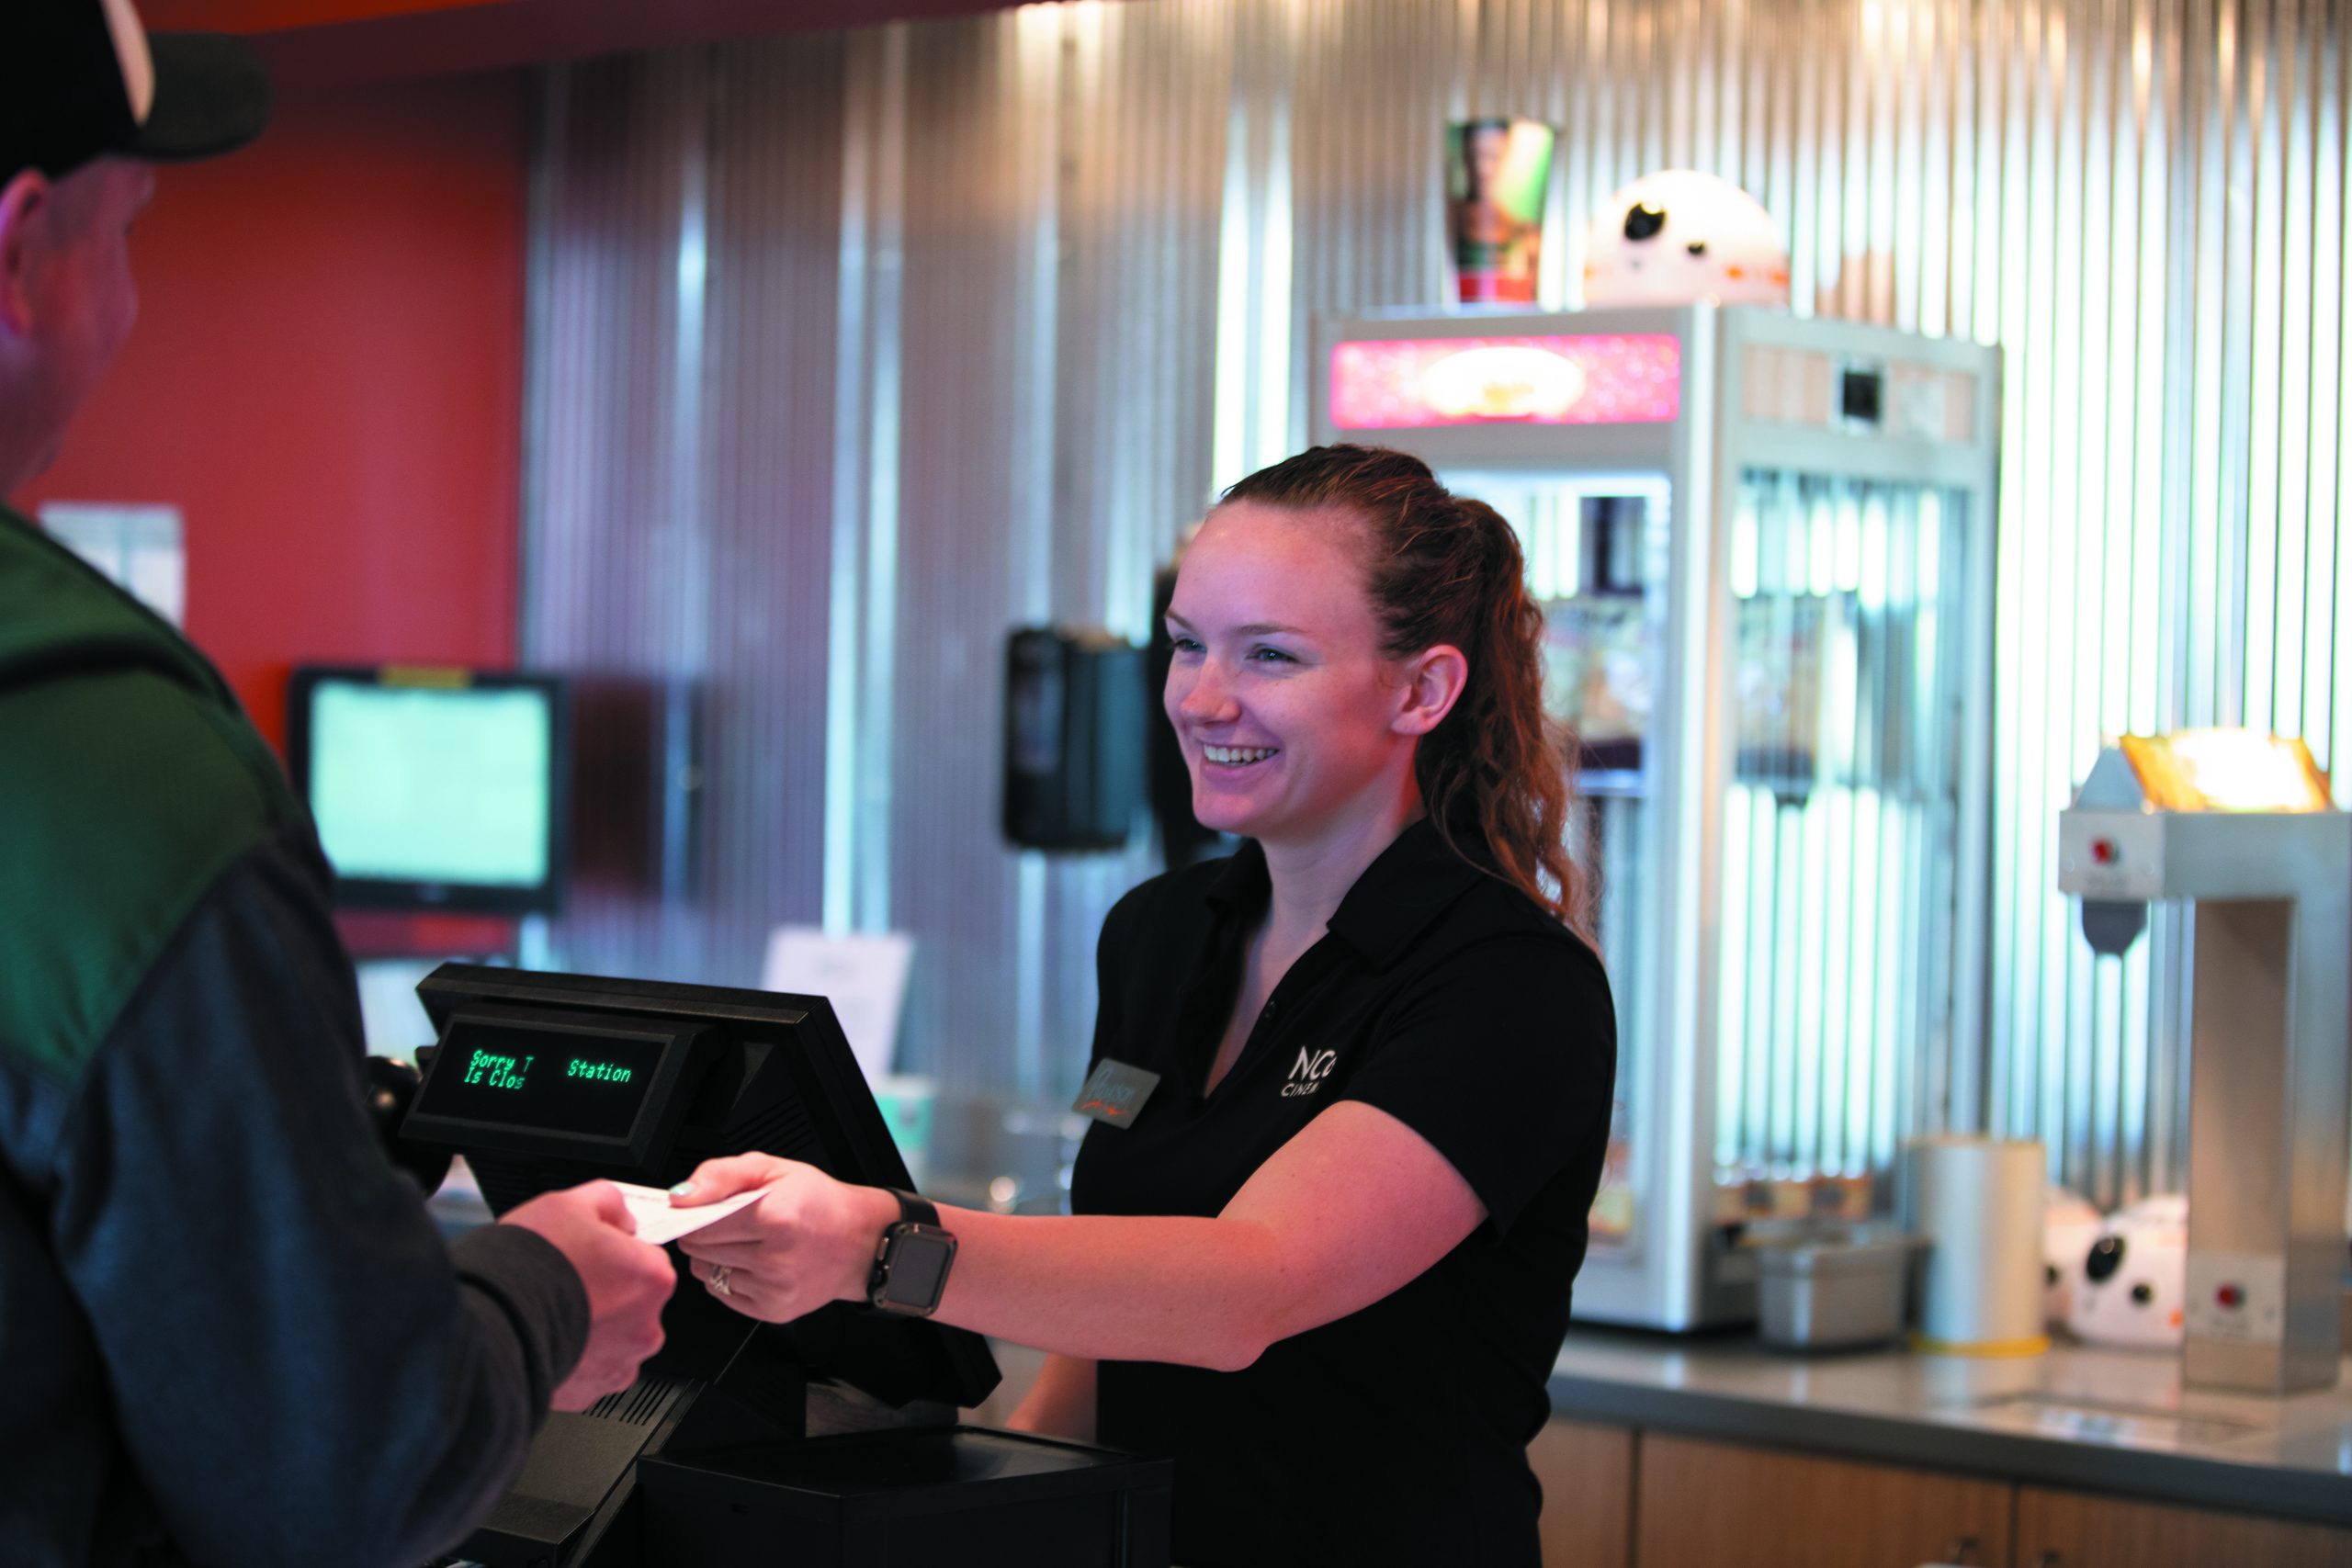 smiling woman behind register handing a receipt